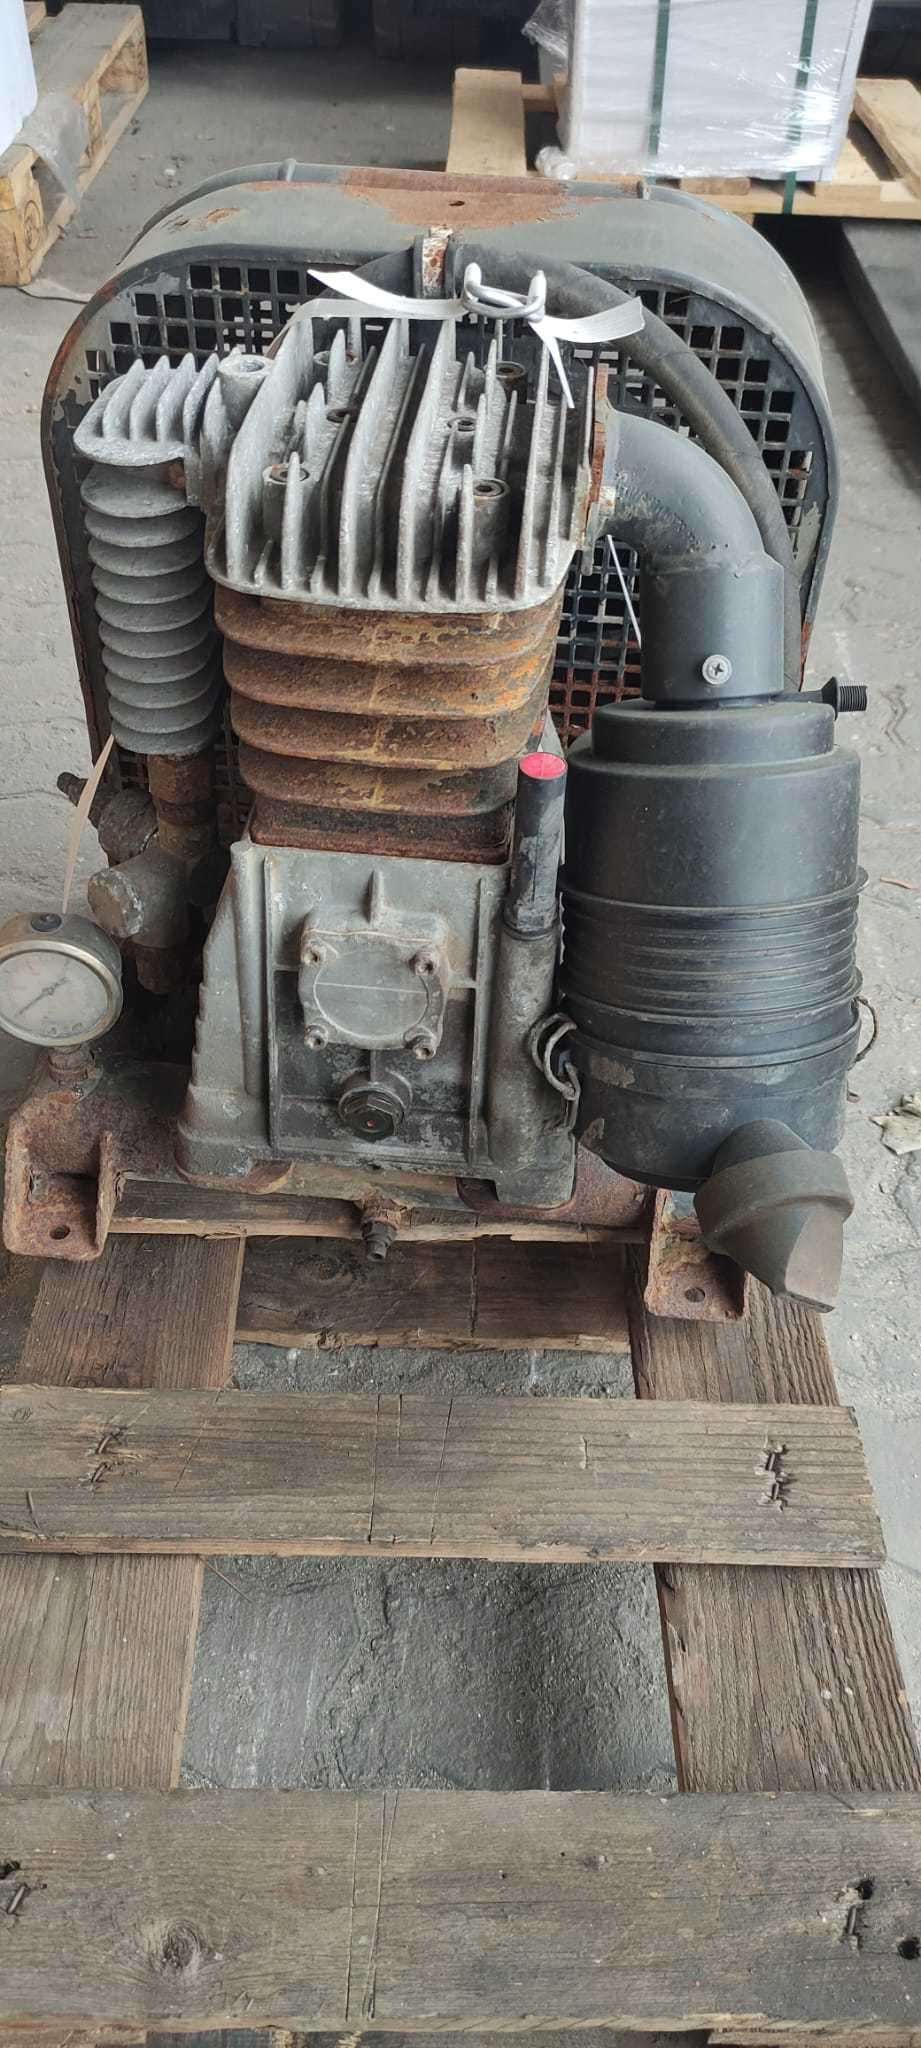 3 Compressores Hidraulicos Rammer Usados